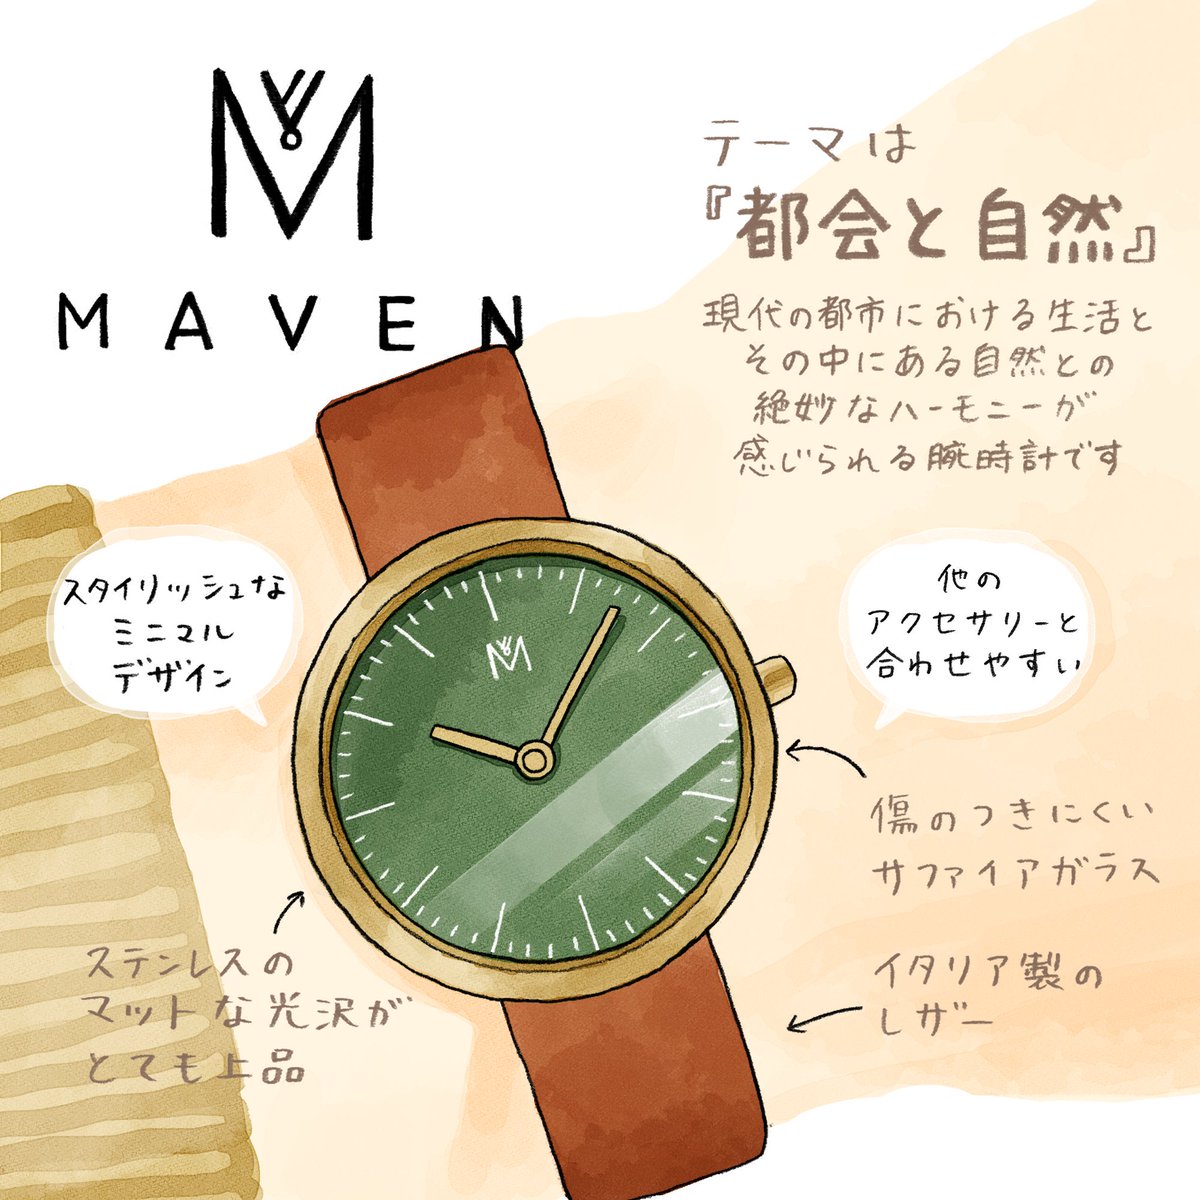 MAVEN WATCHES(@mavenjapan)様より素敵な時計をいただきました腕時計️
他では見られない絶妙な色味が日常を彩ります✨

10%OFFクーポンコード【ruuiruiruirui】
ショップ: https://t.co/UXAaeBEGtl
#mavenwatches #腕時計 #PR 